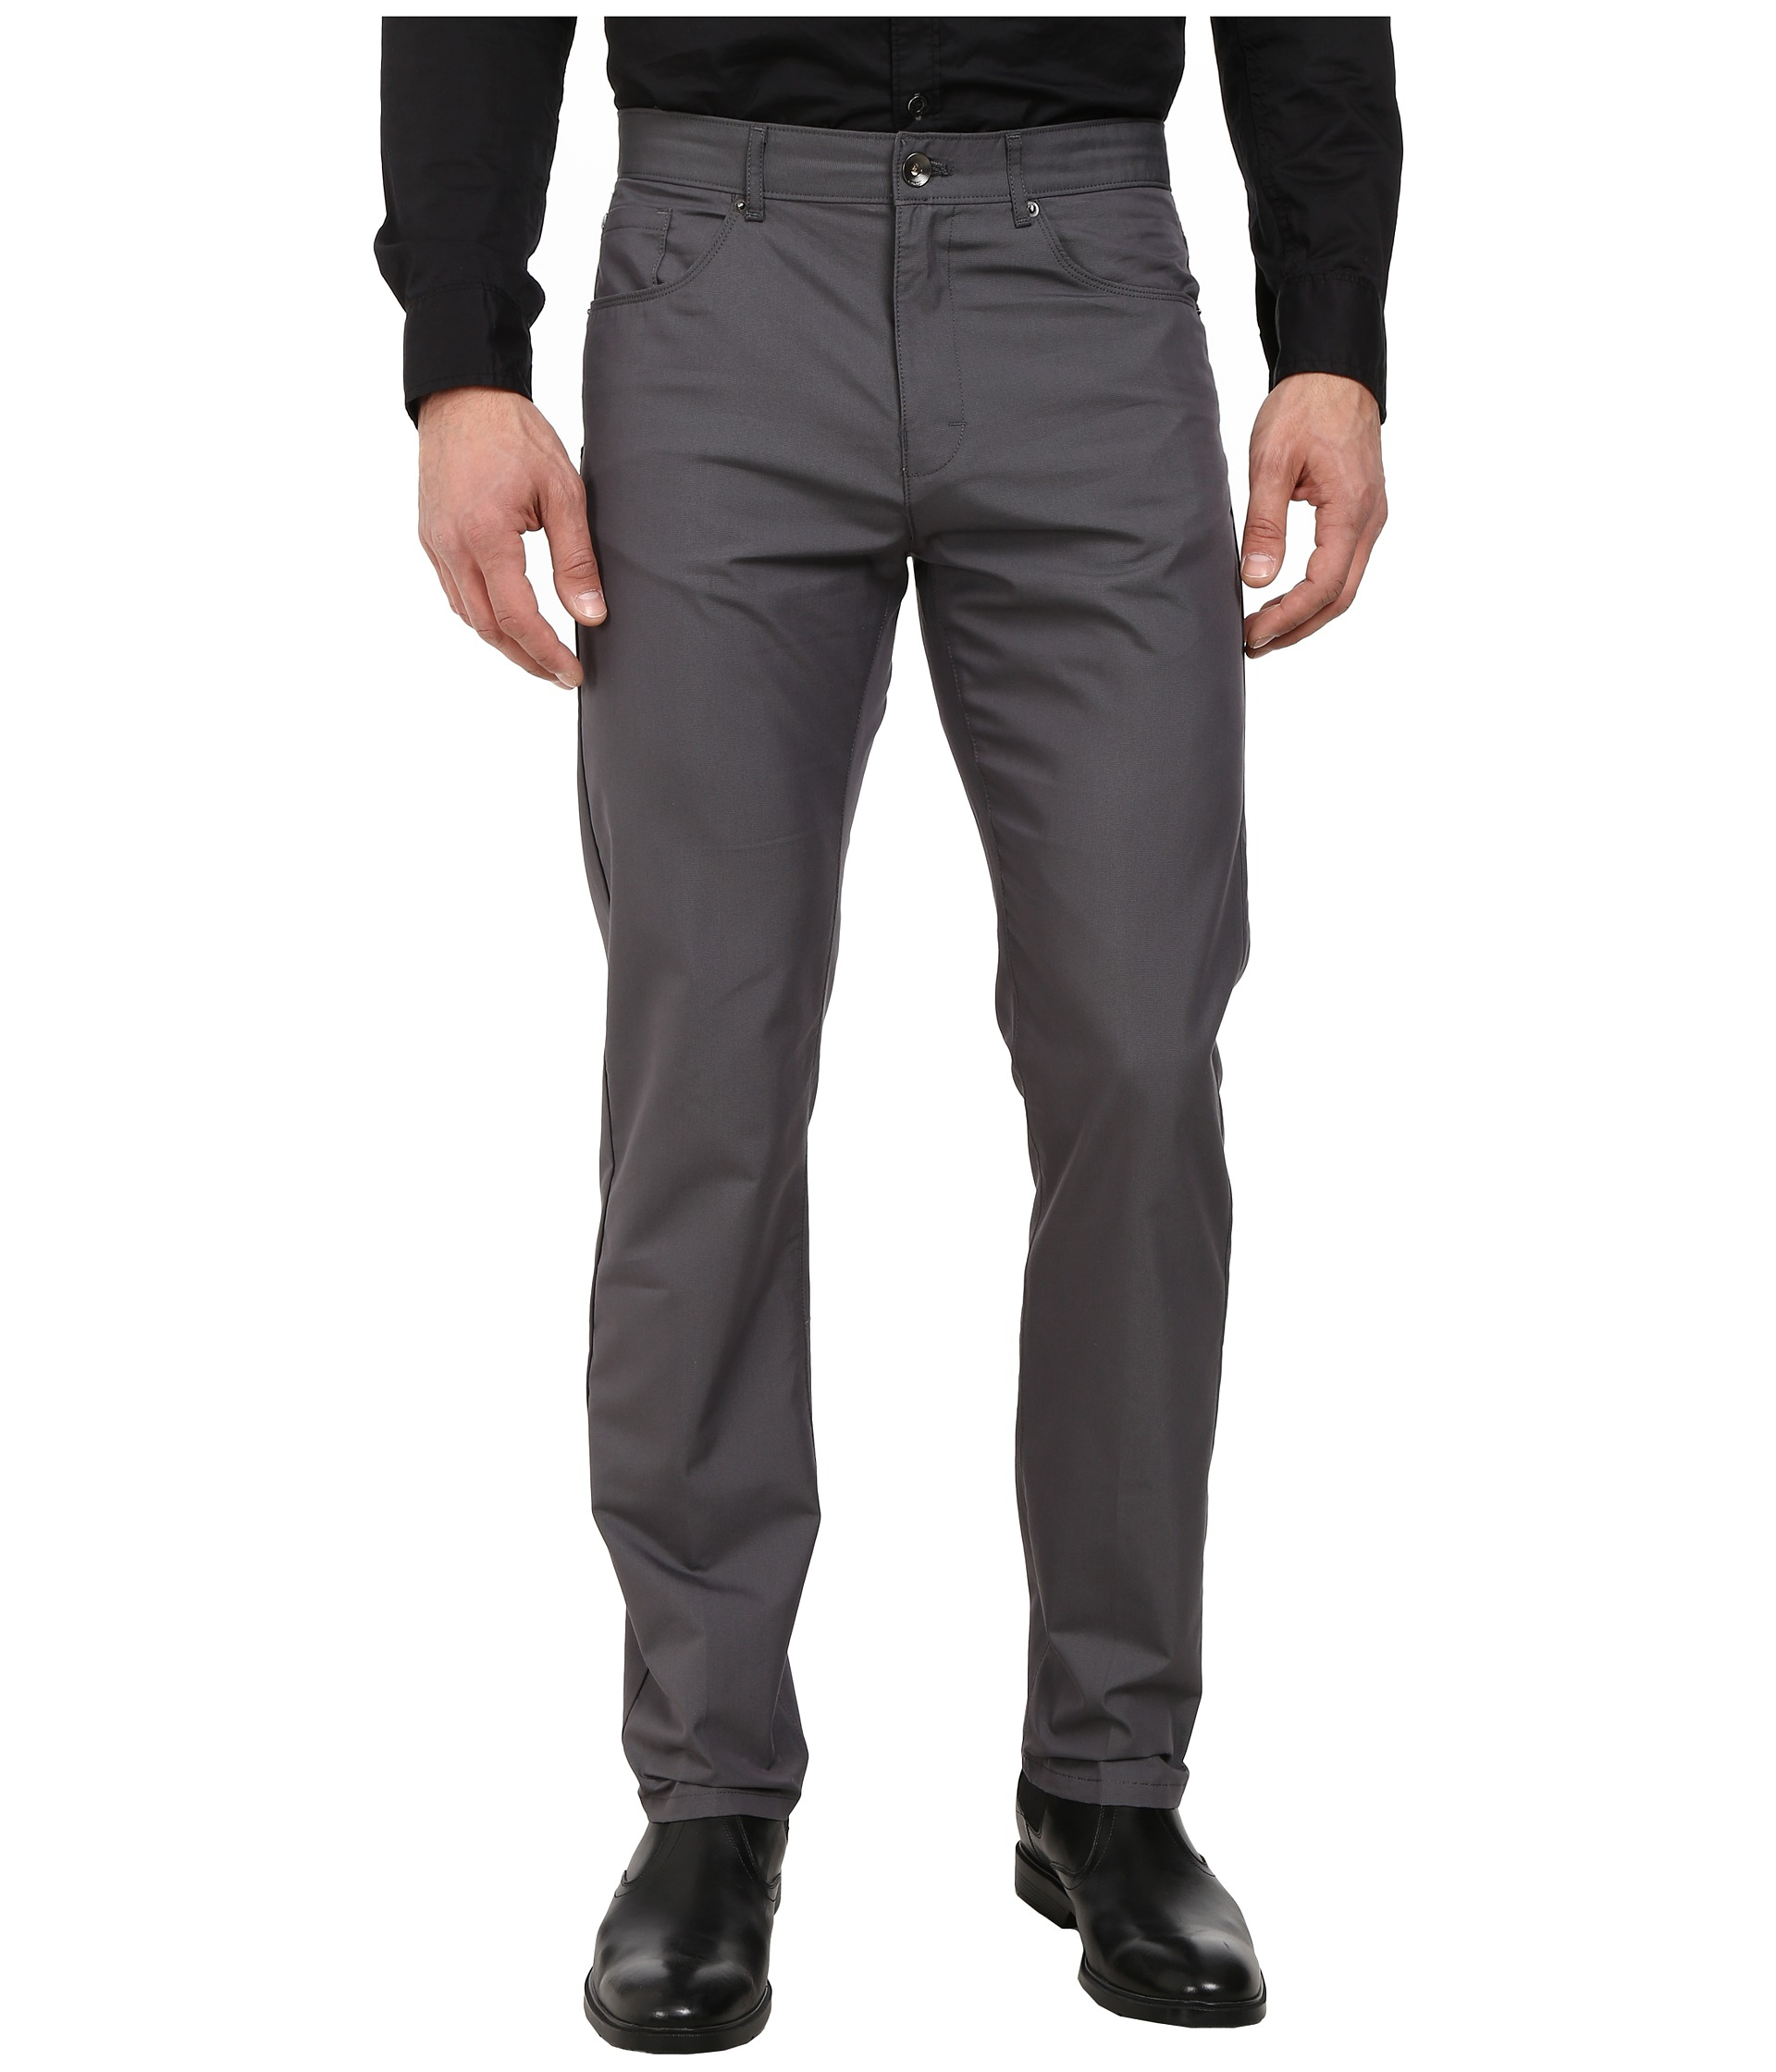 Calvin Klein Five-Pocket Twill Pants in Gray for Men - Lyst